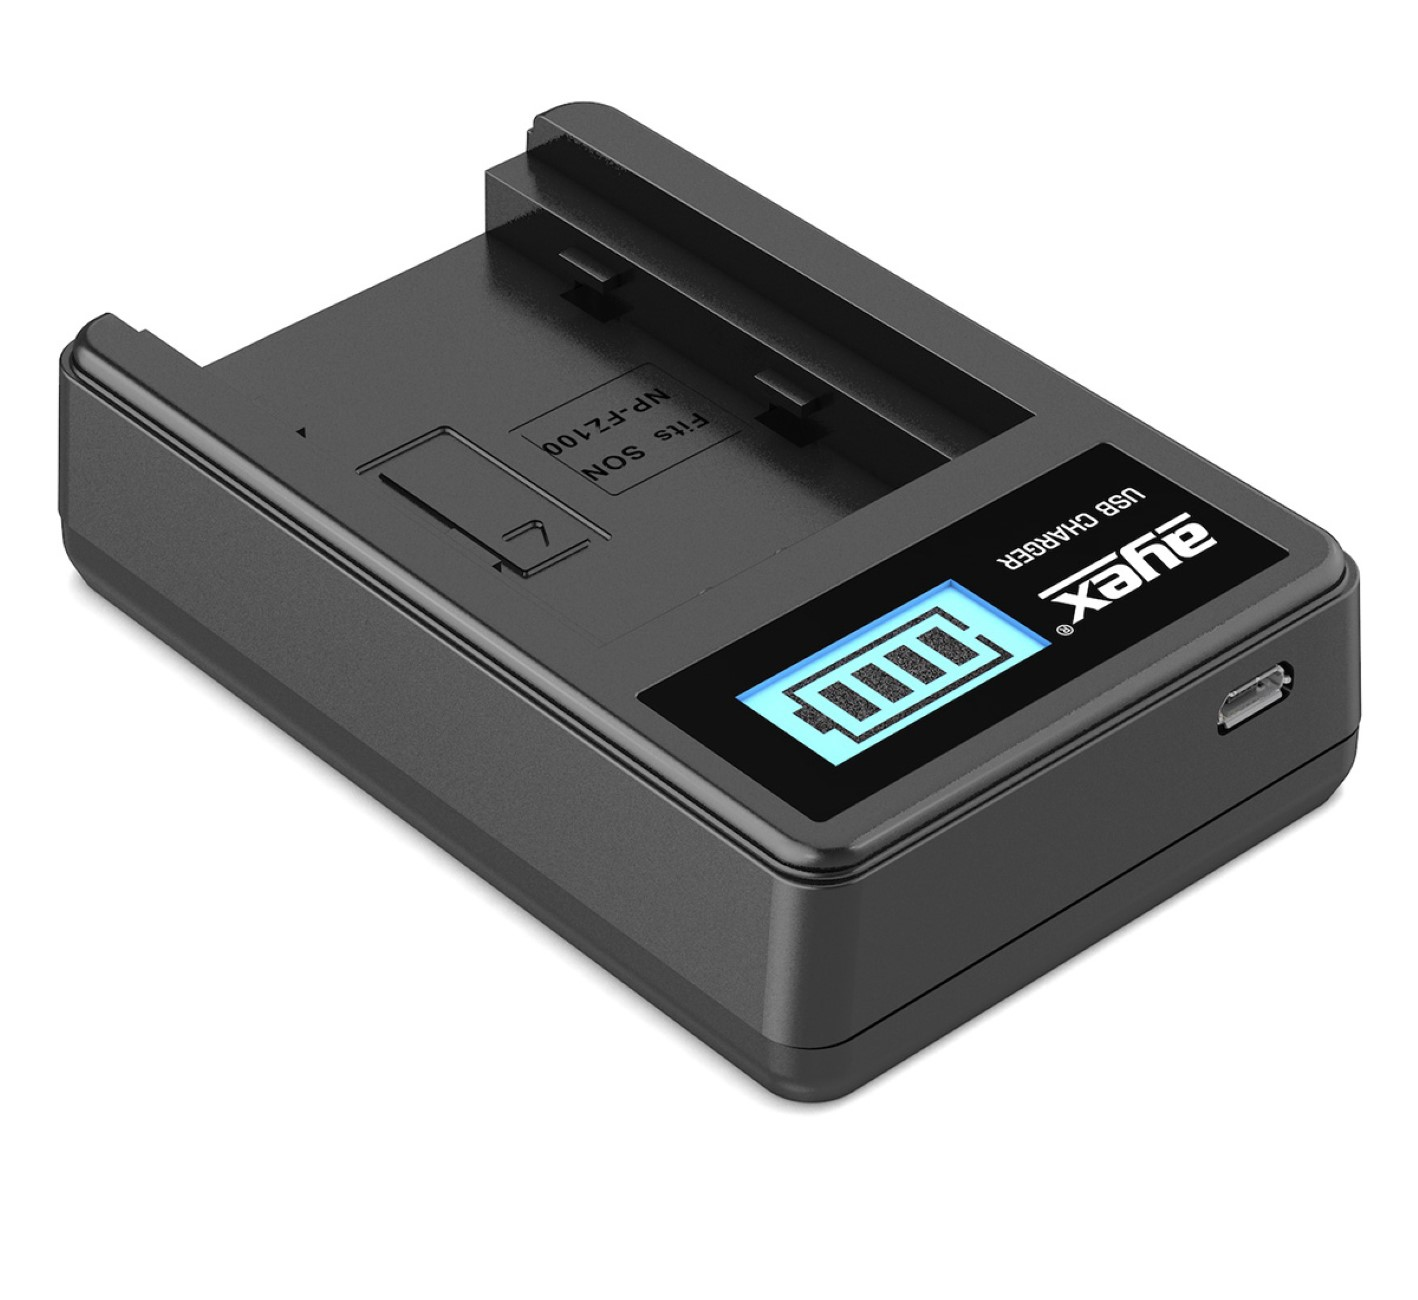 AYEX USB Ladegerät für Sony NP-FZ100 Black Lader, Akku, Kamera-Akku